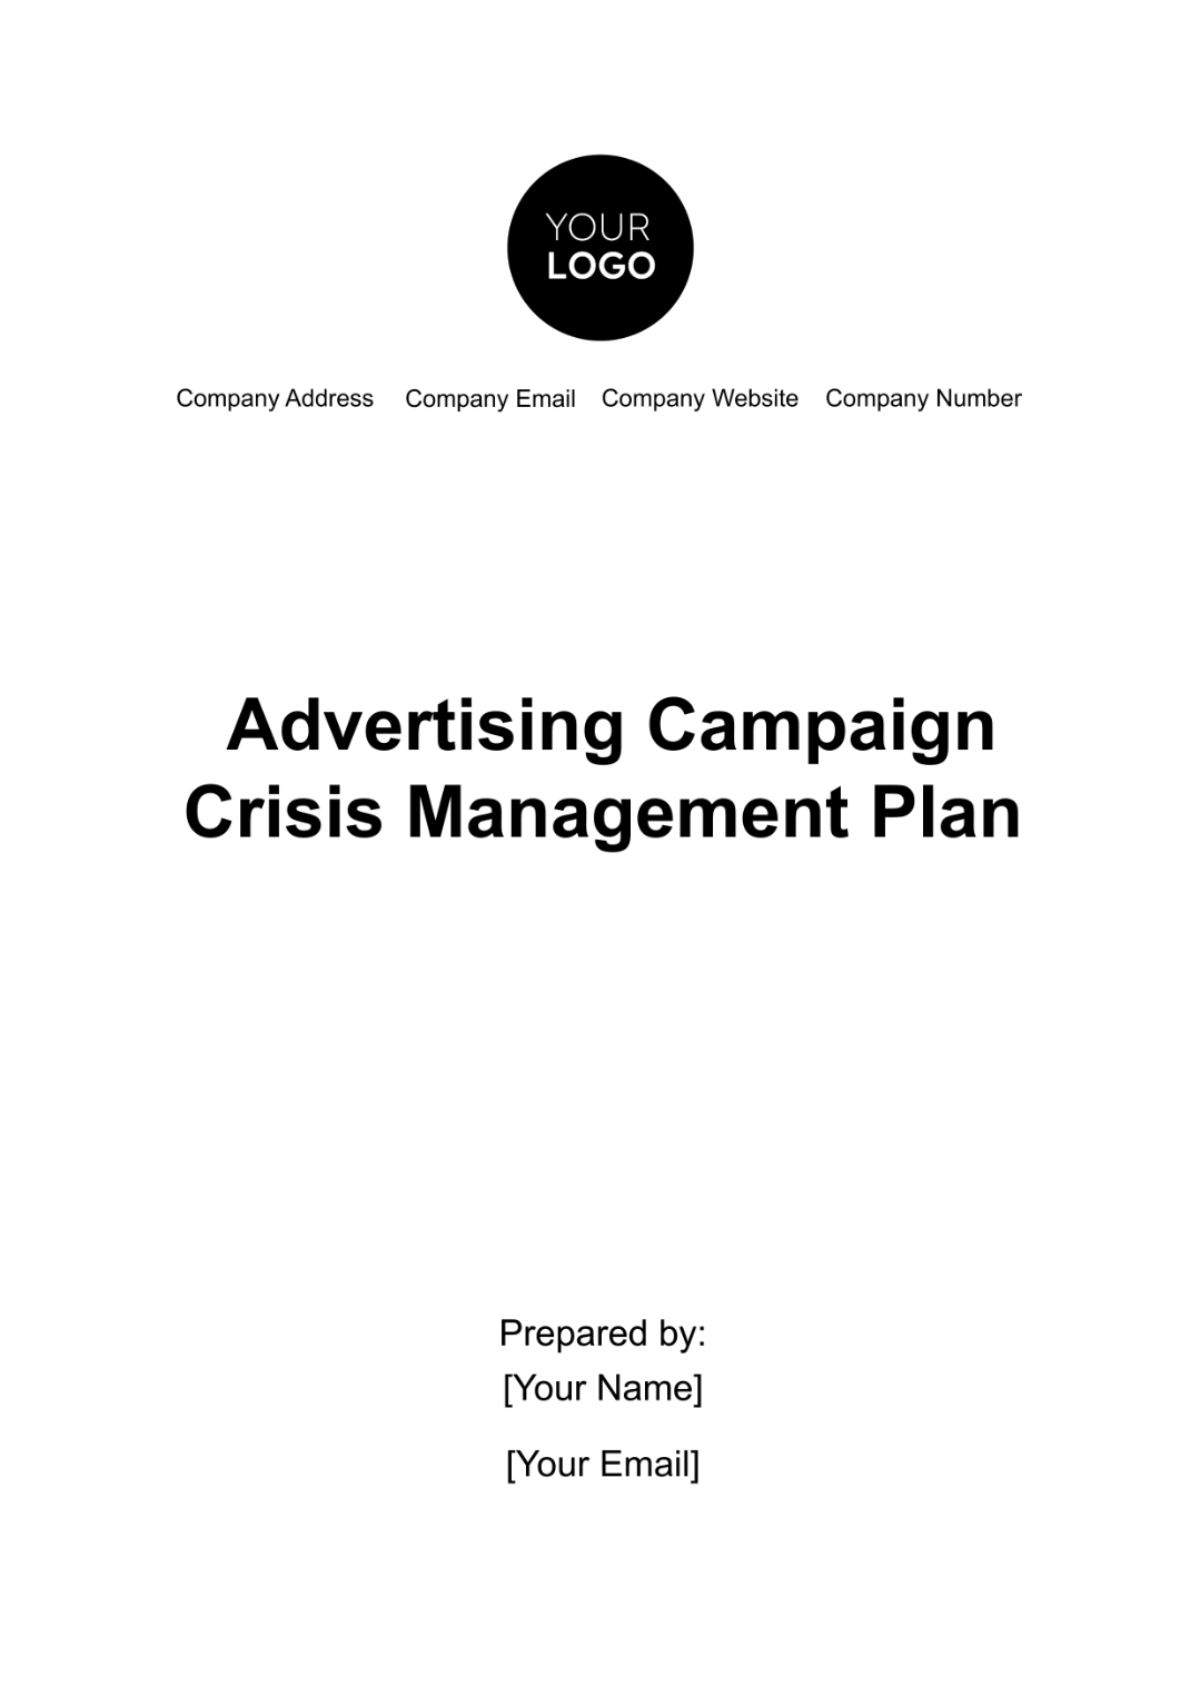 Advertising Campaign Crisis Management Plan Template